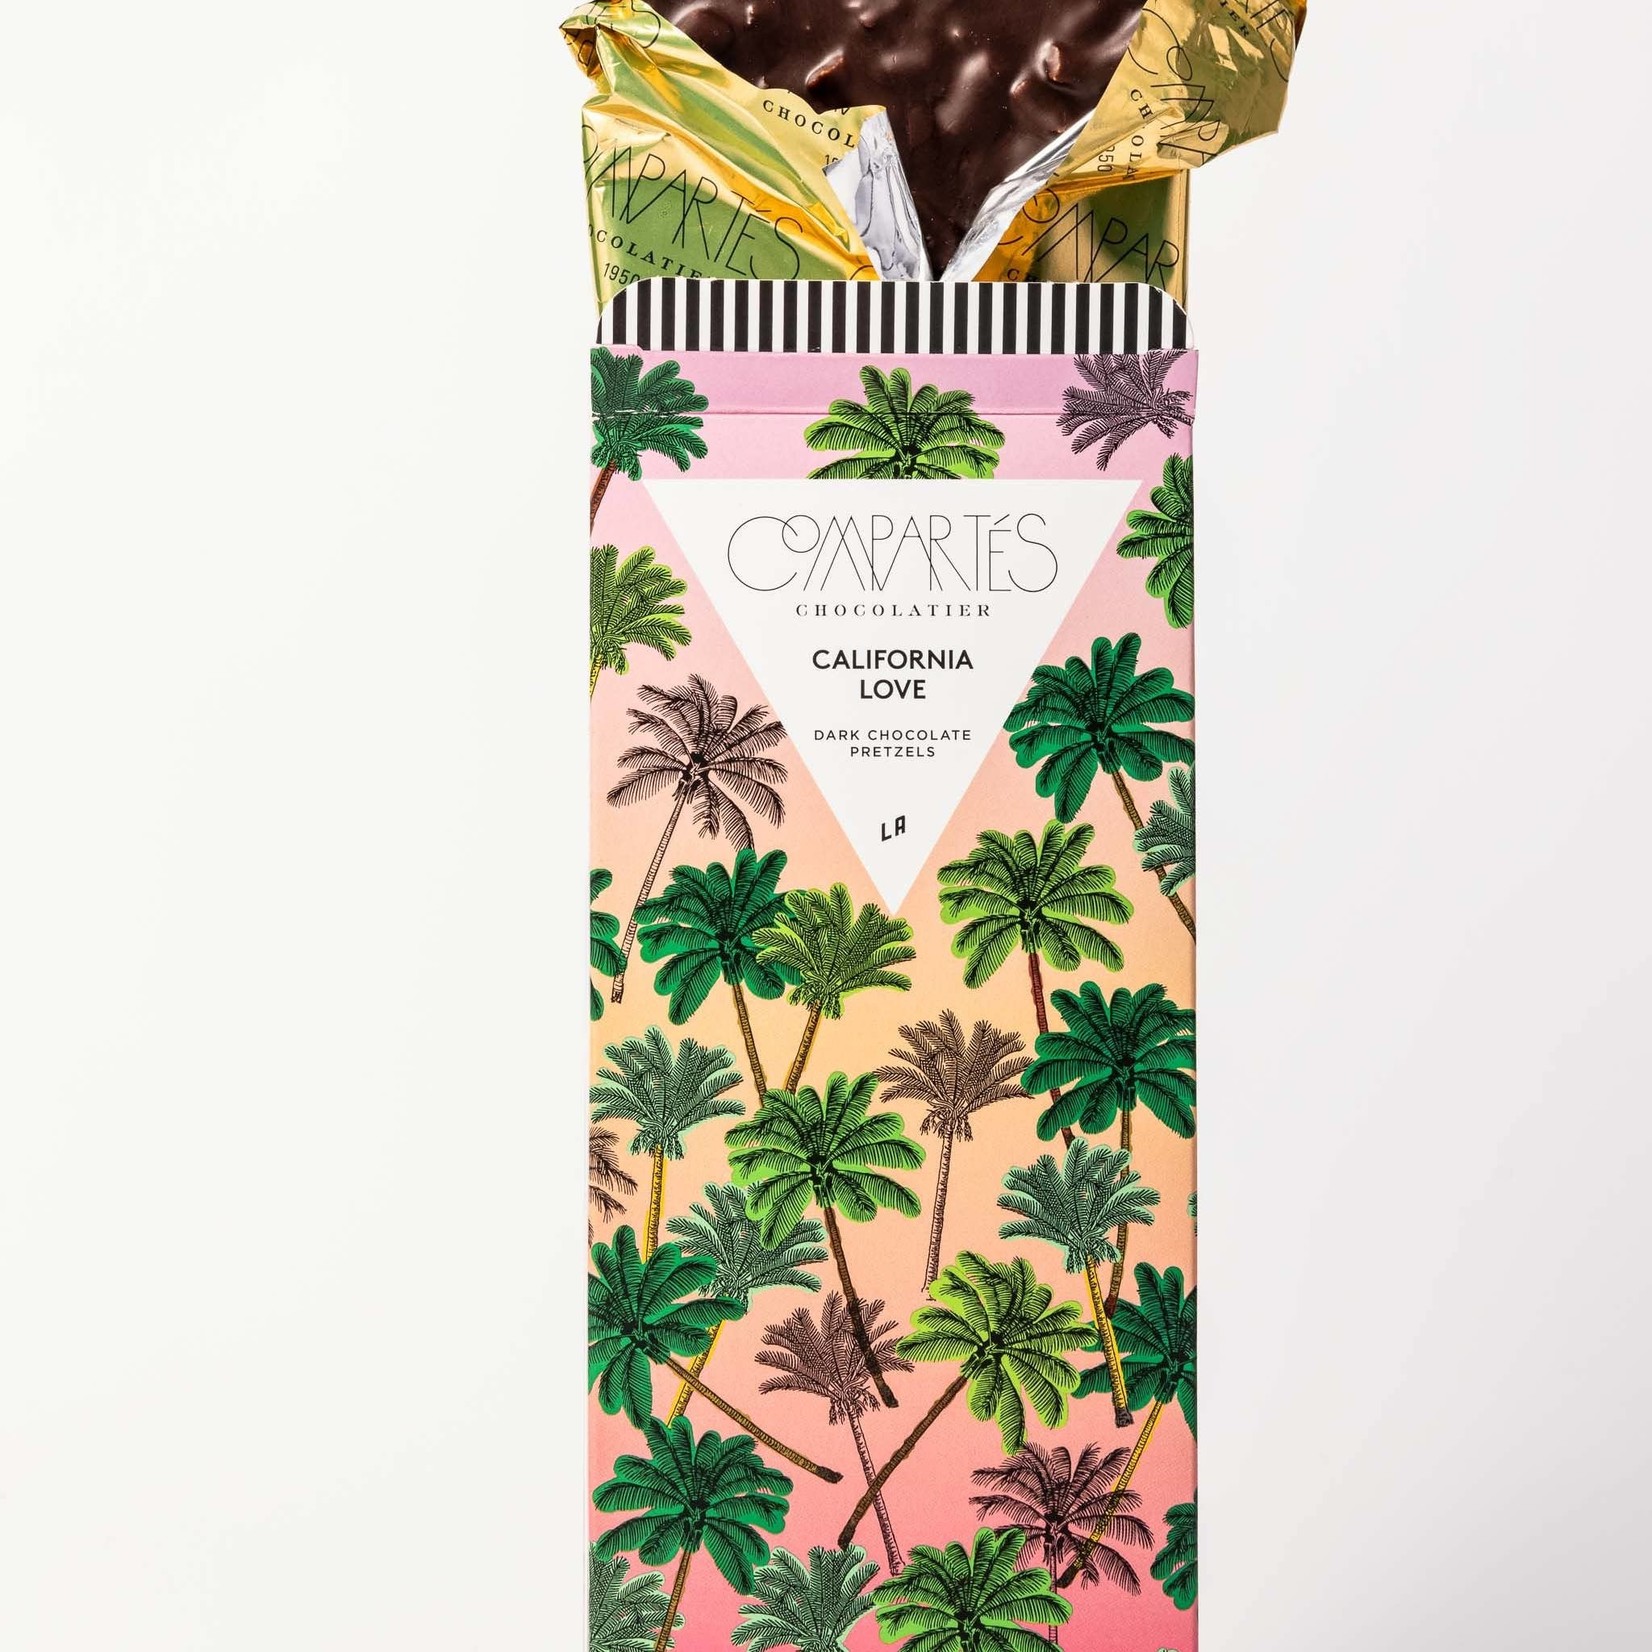 Compartes Chocolate Compartes California Love Dark Salted Pretzel Chocolate Bar